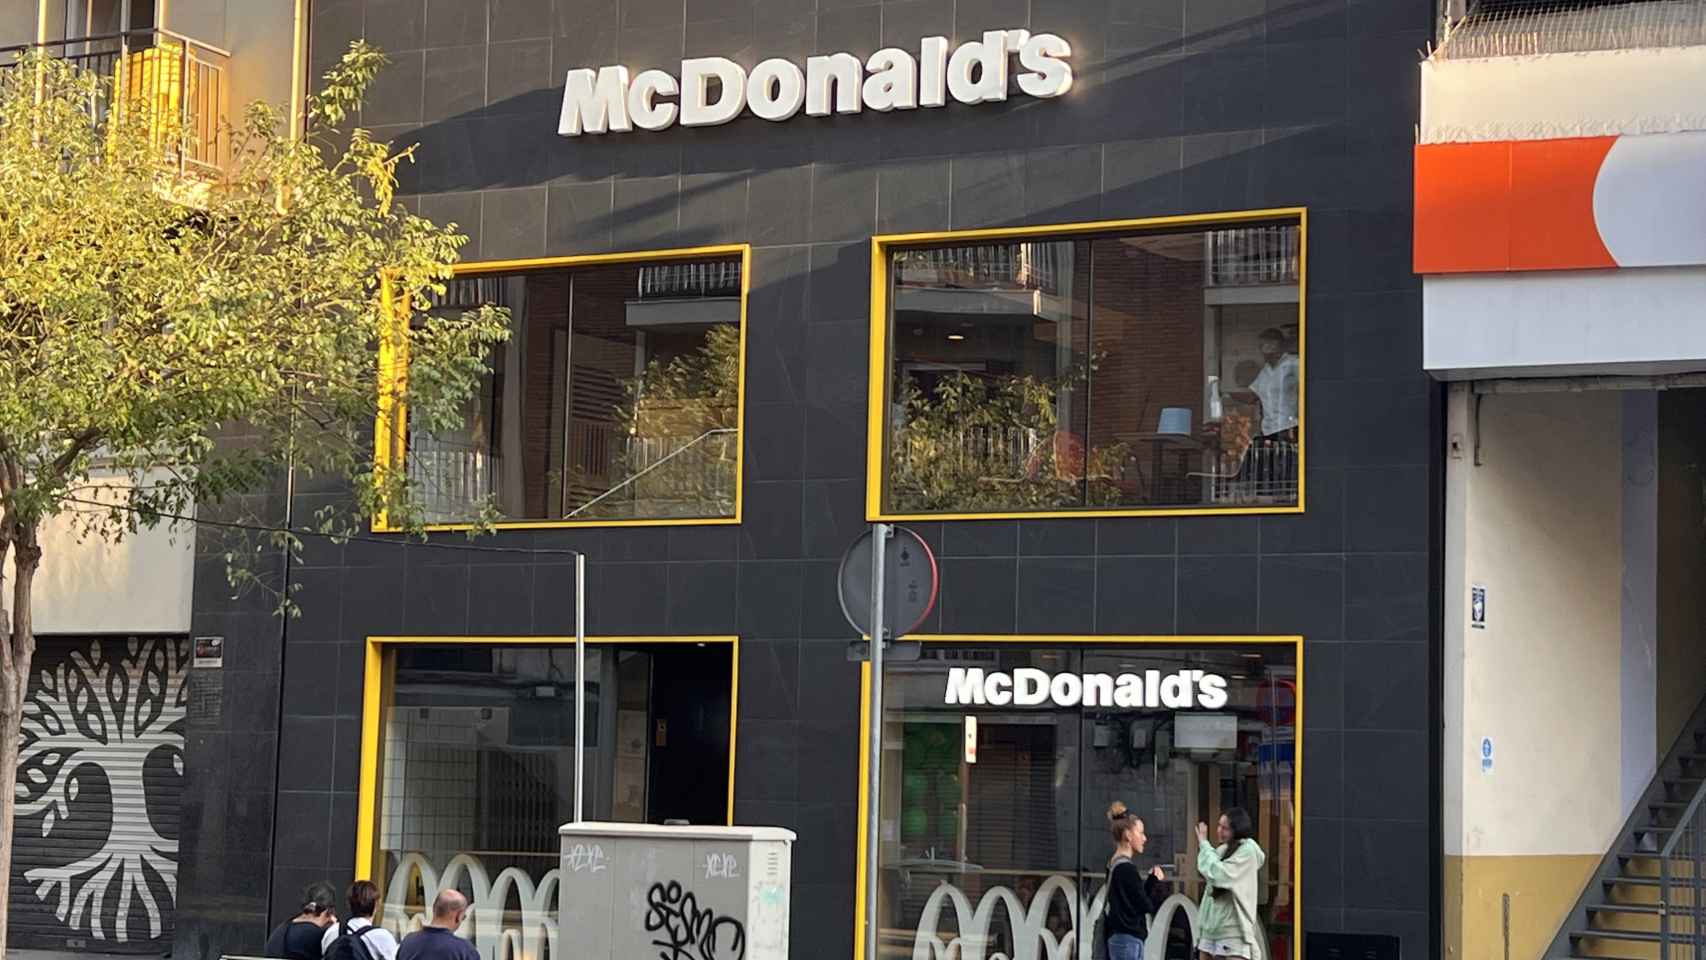 Fachada del restaurante McDonald's de Horta-Guinardó, en Barcelona / MCDONALD'S